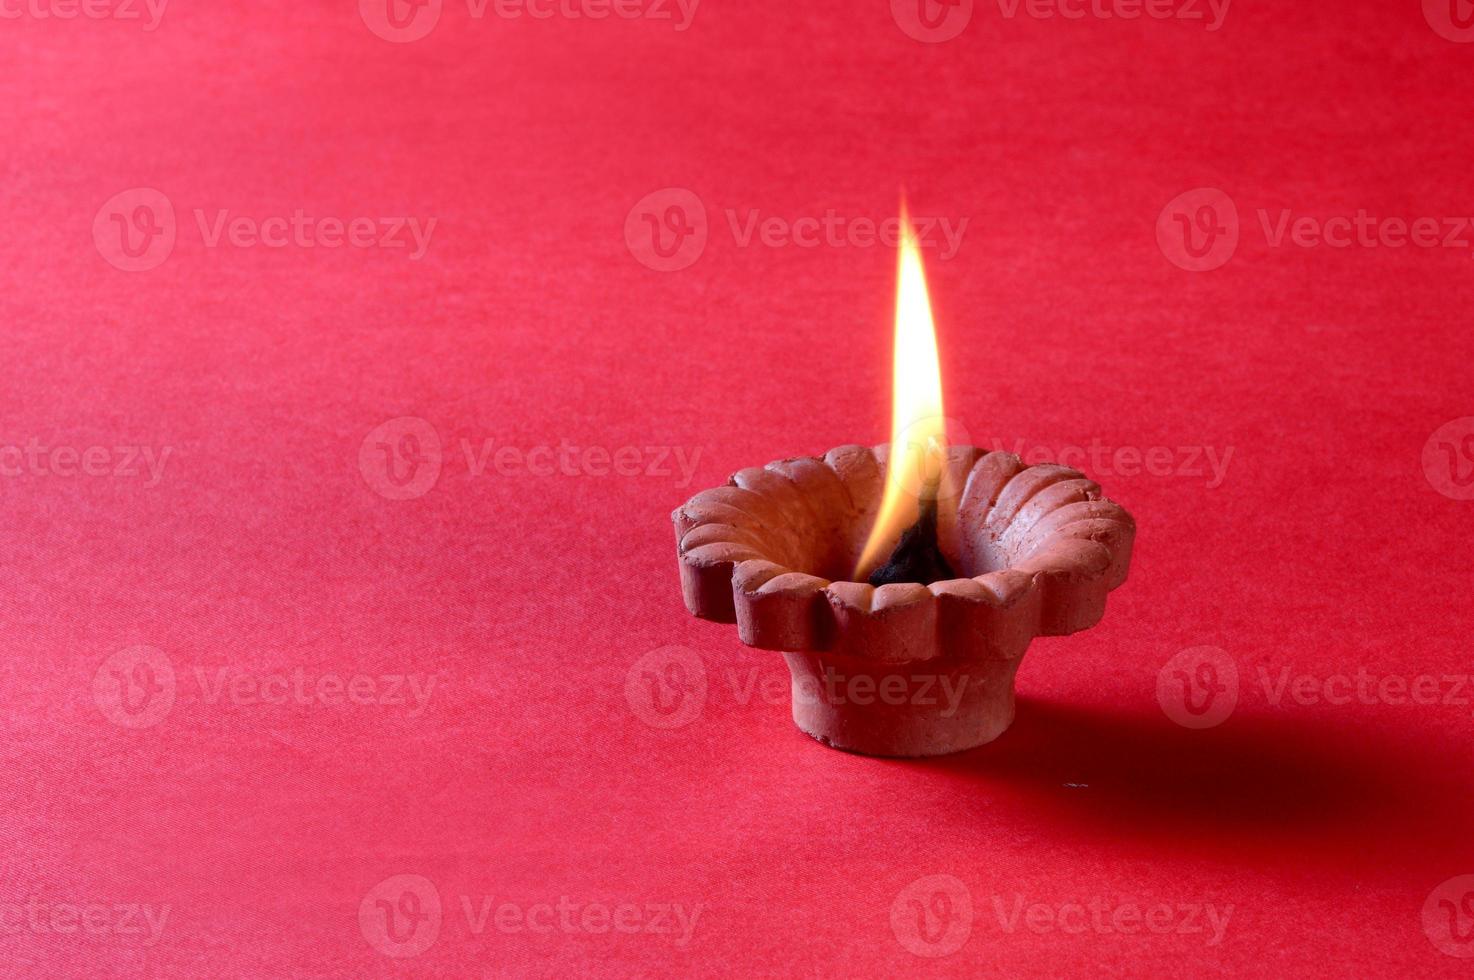 Clay diya lamps lit during diwali celebration. Greetings Card Design Indian Hindu Light Festival called Diwali photo